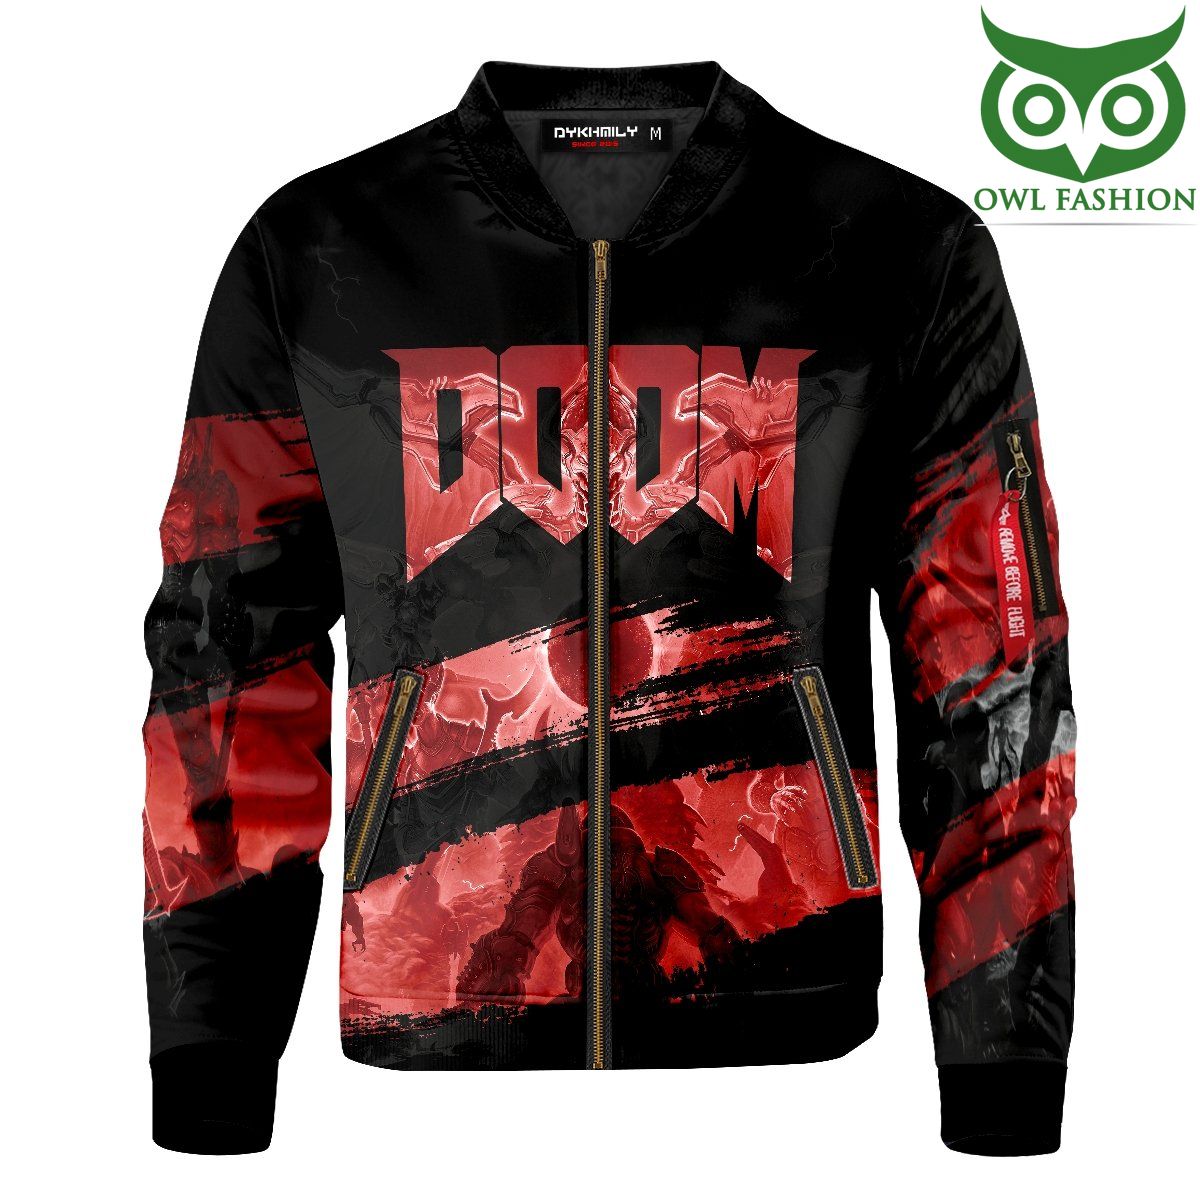 rI7JRVau 31 Doom Eternal Printed Bomber Jacket for fans